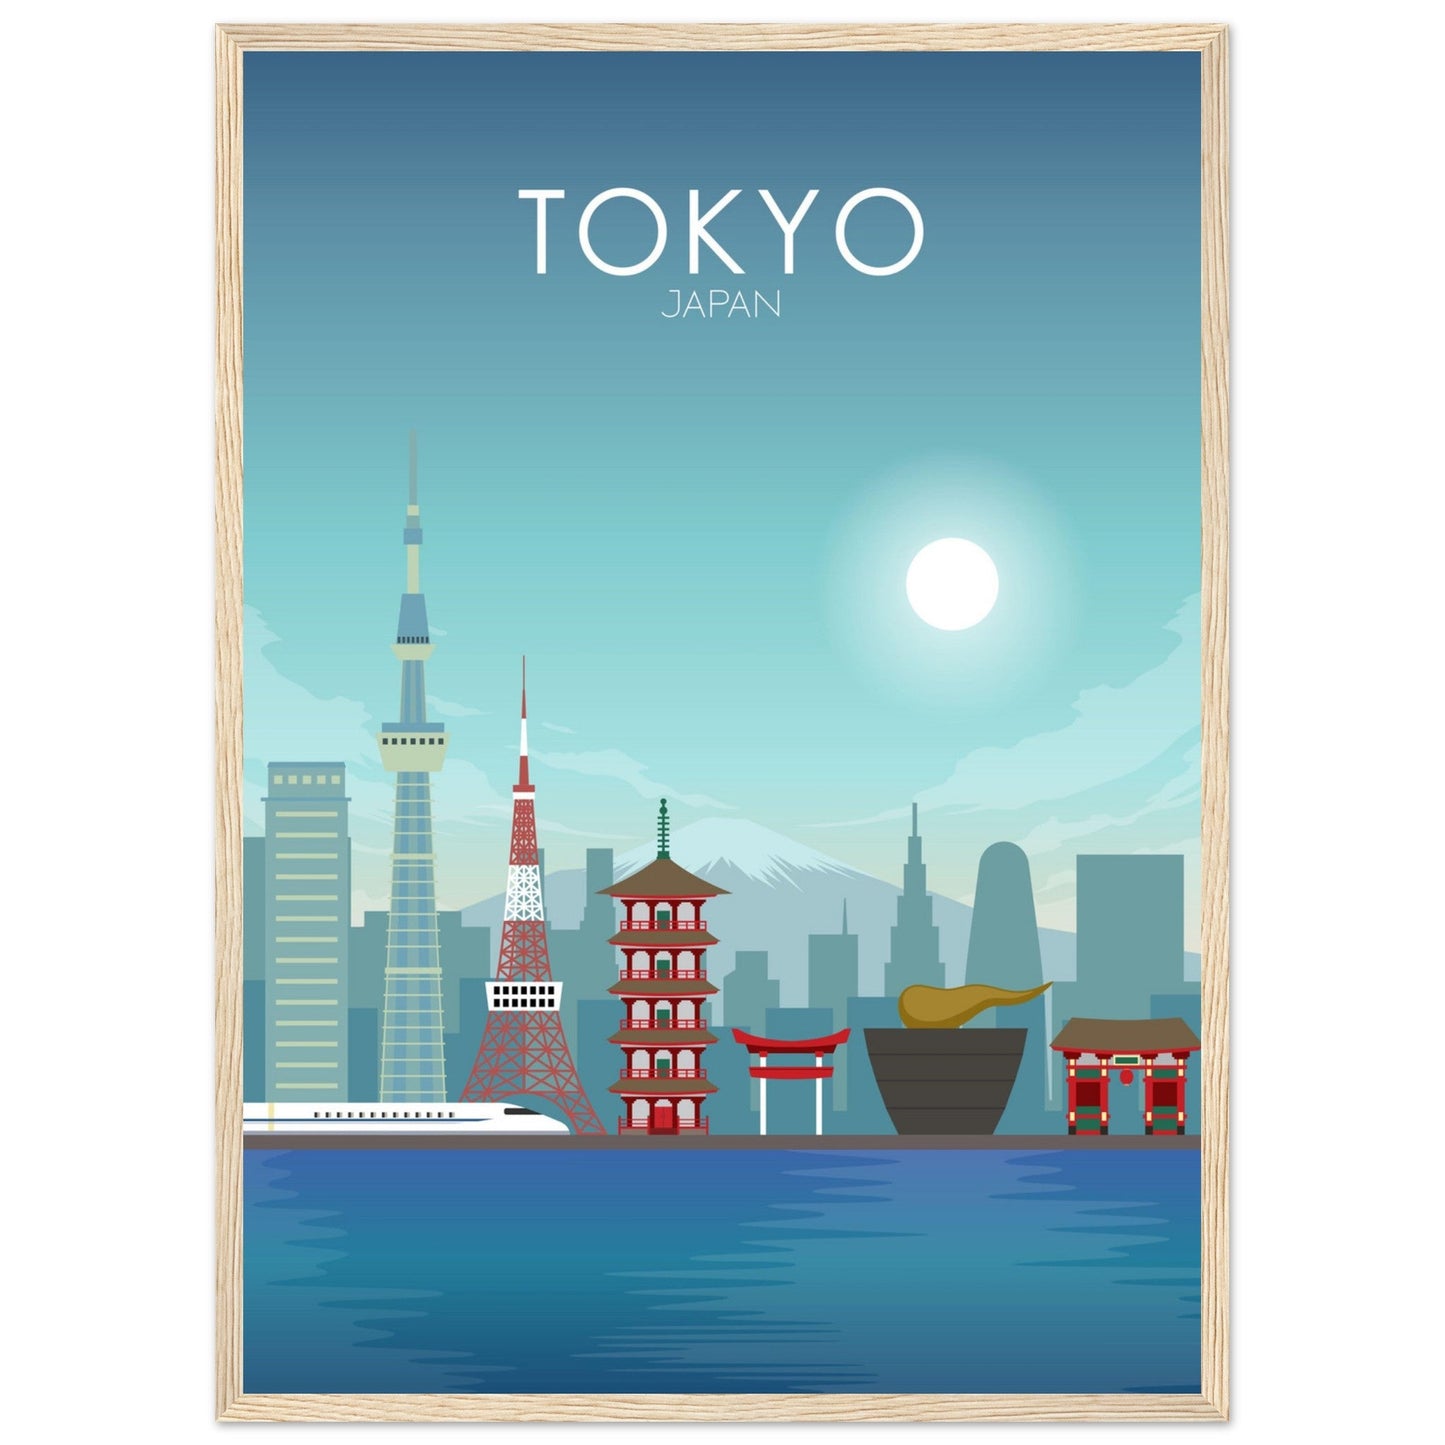 Tokyo Poster | Tokyo Wall Art | Tokyo Daytime Print